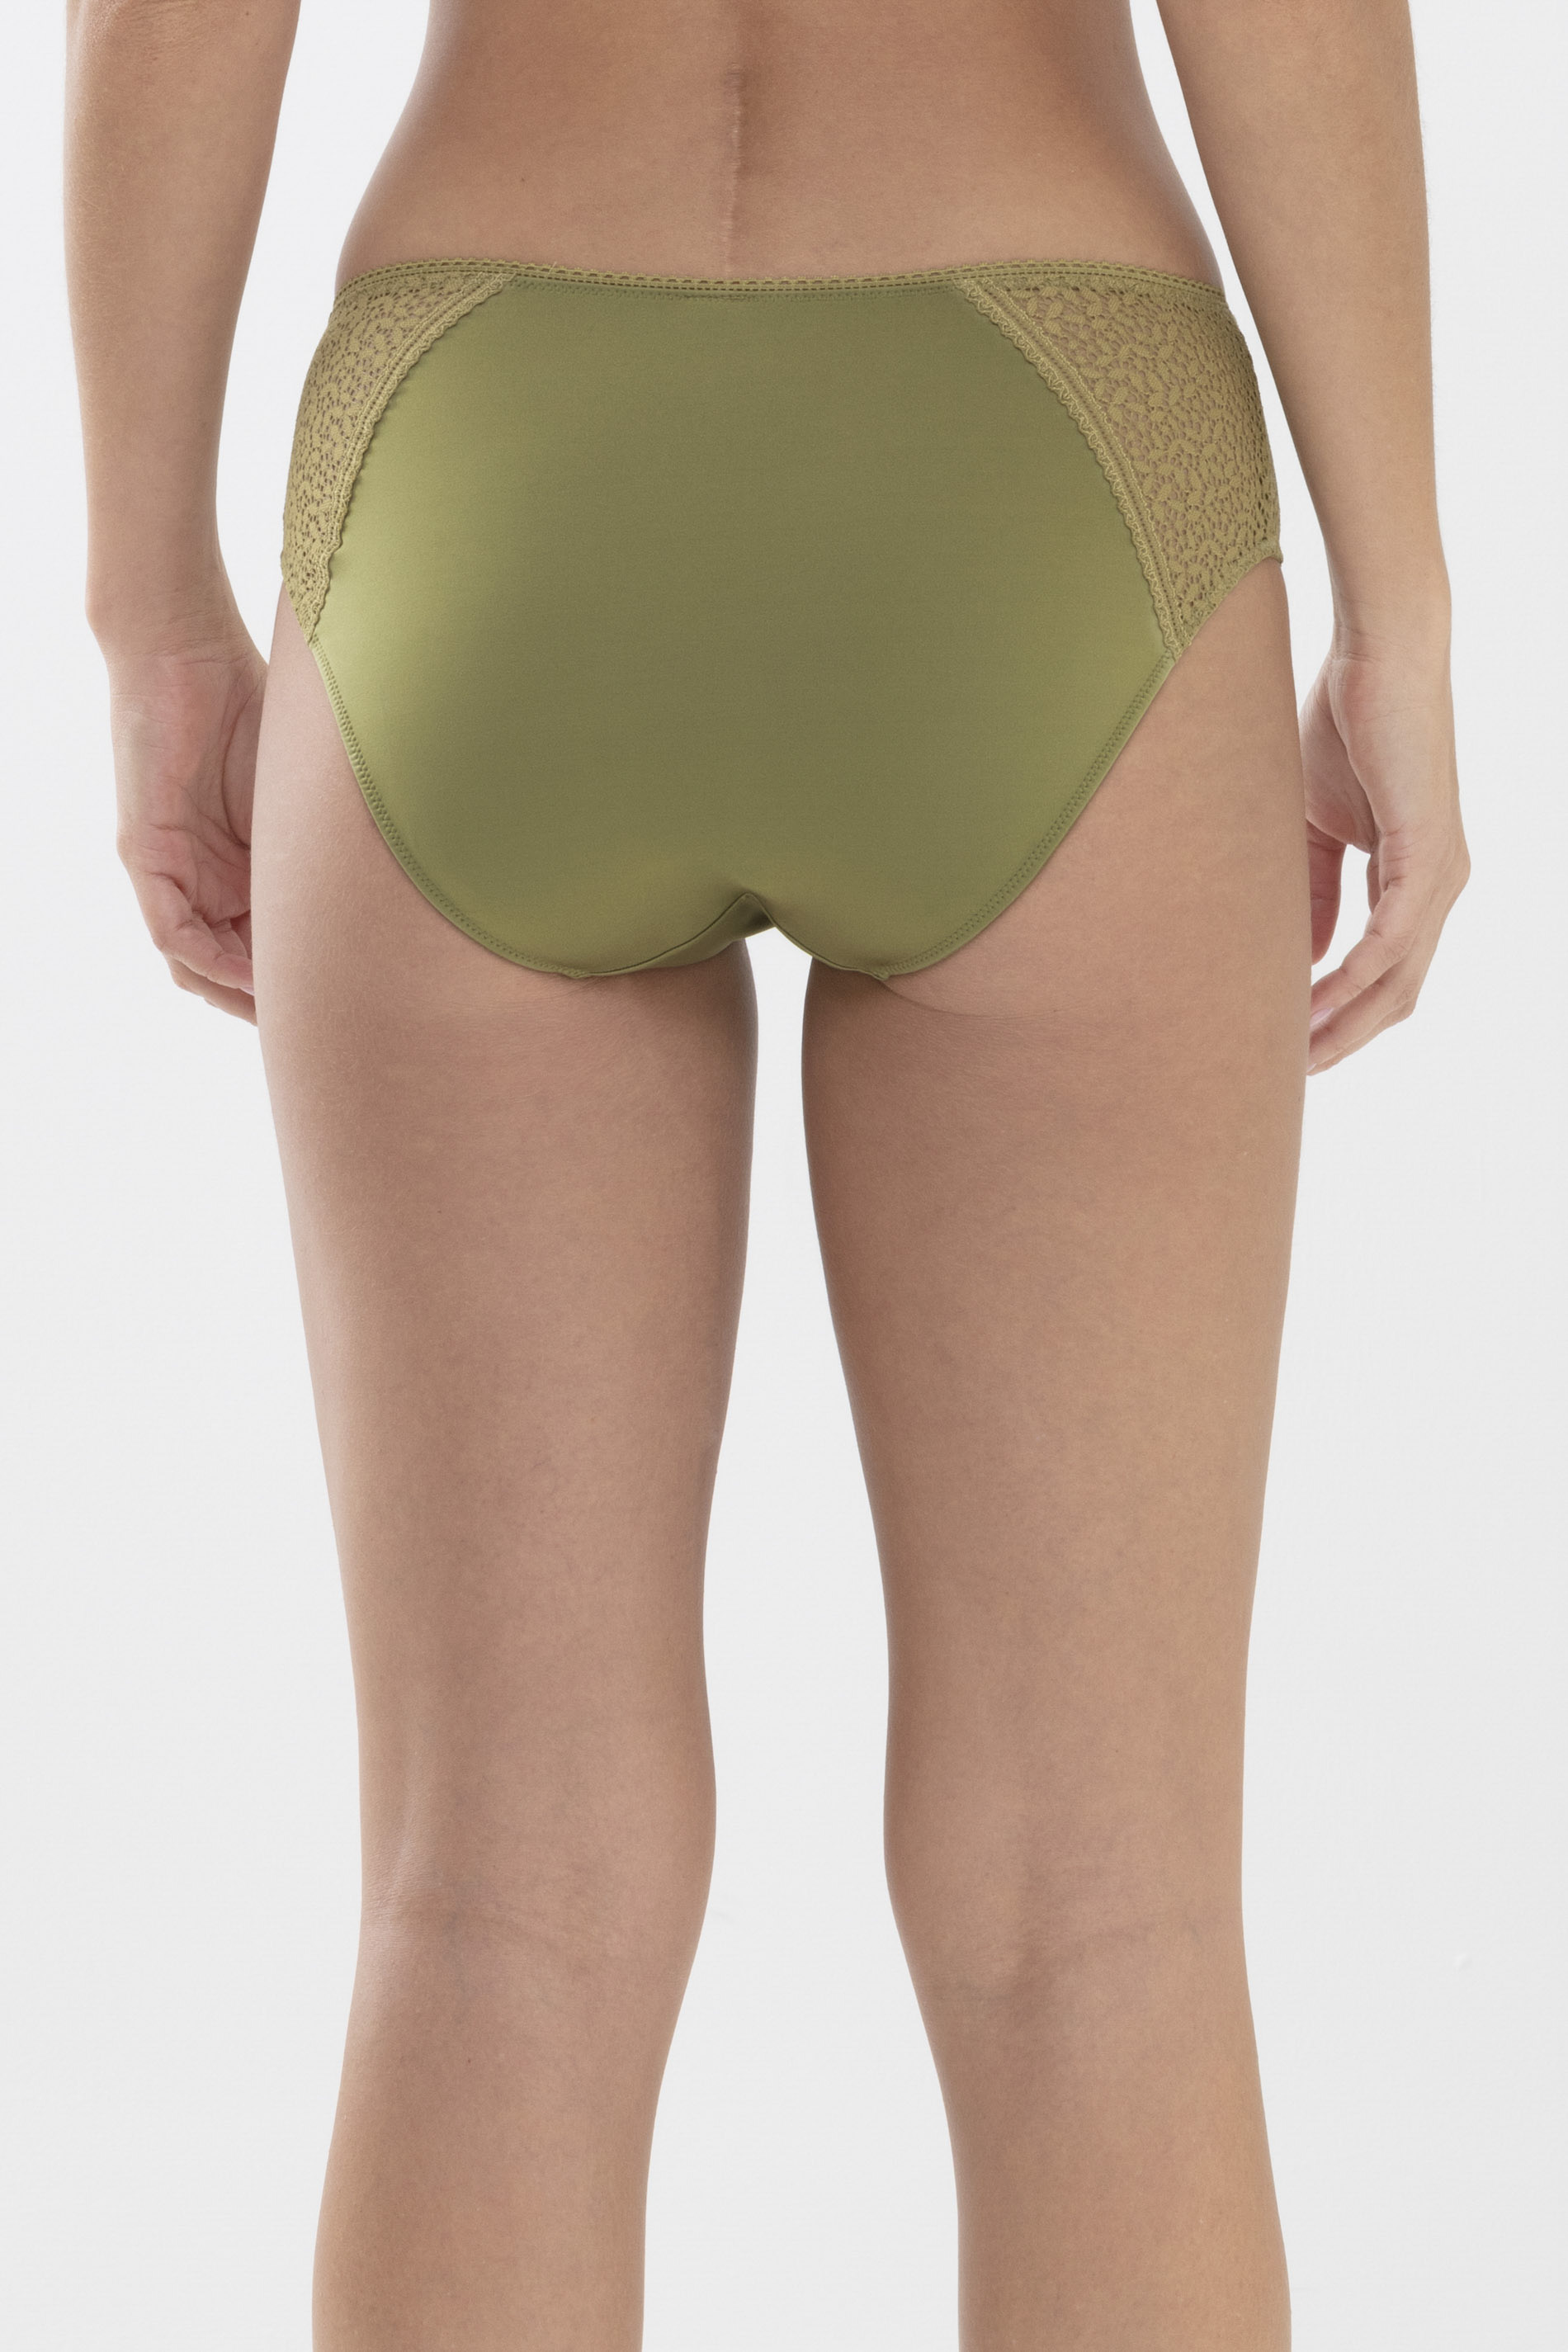 American pants Tuscan Green Serie Incredible Rear View | mey®